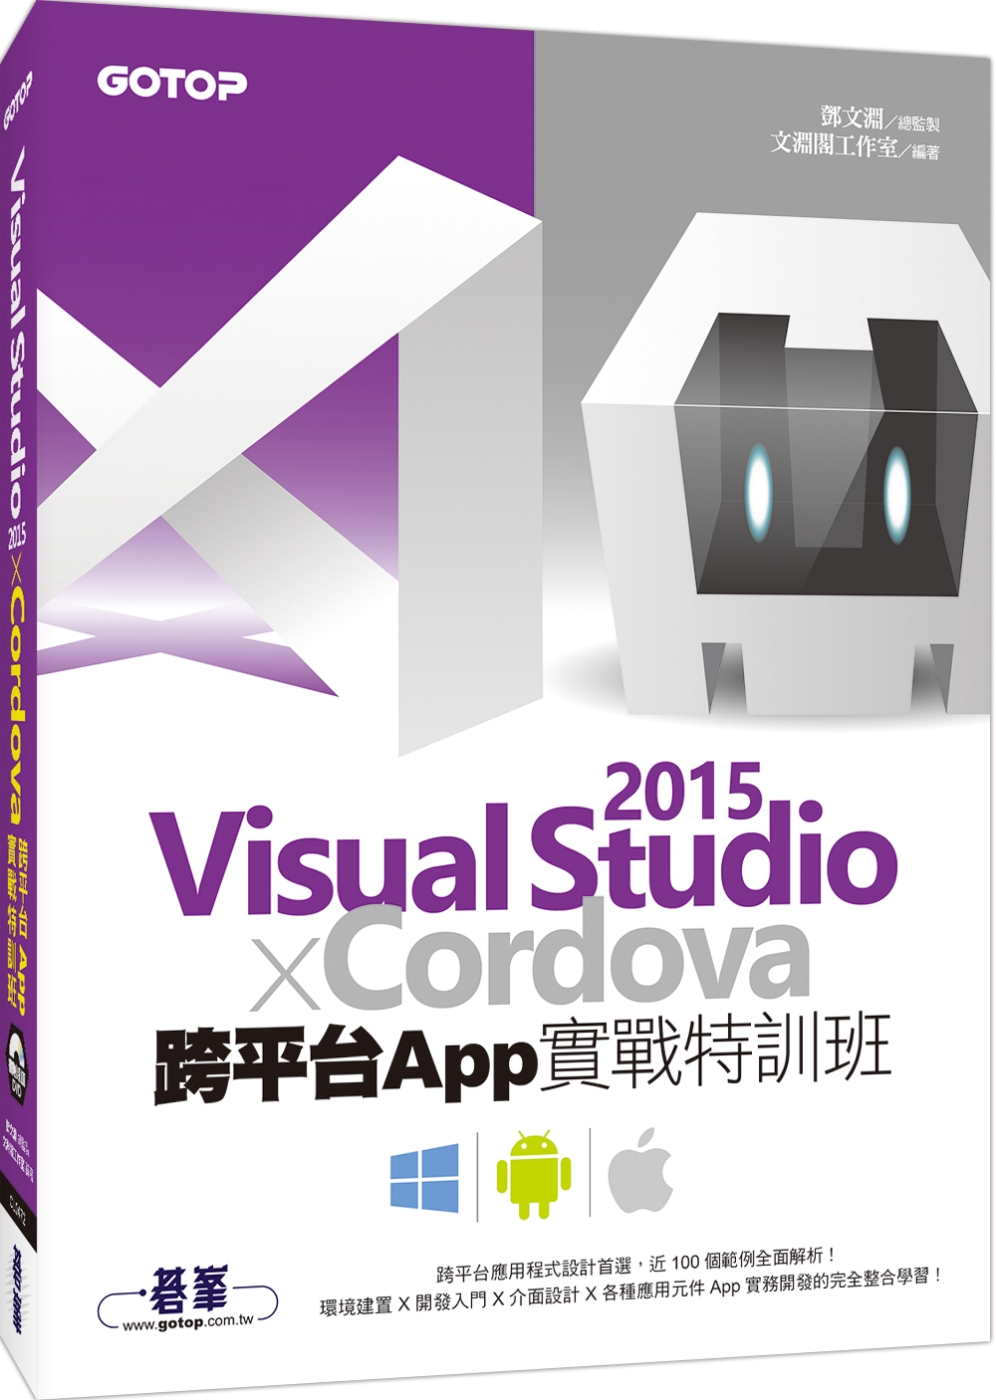 Visual Studio 2015 X Cordova跨平台App實戰特訓班(附近120分鐘關鍵影音教學/全書範例程式)